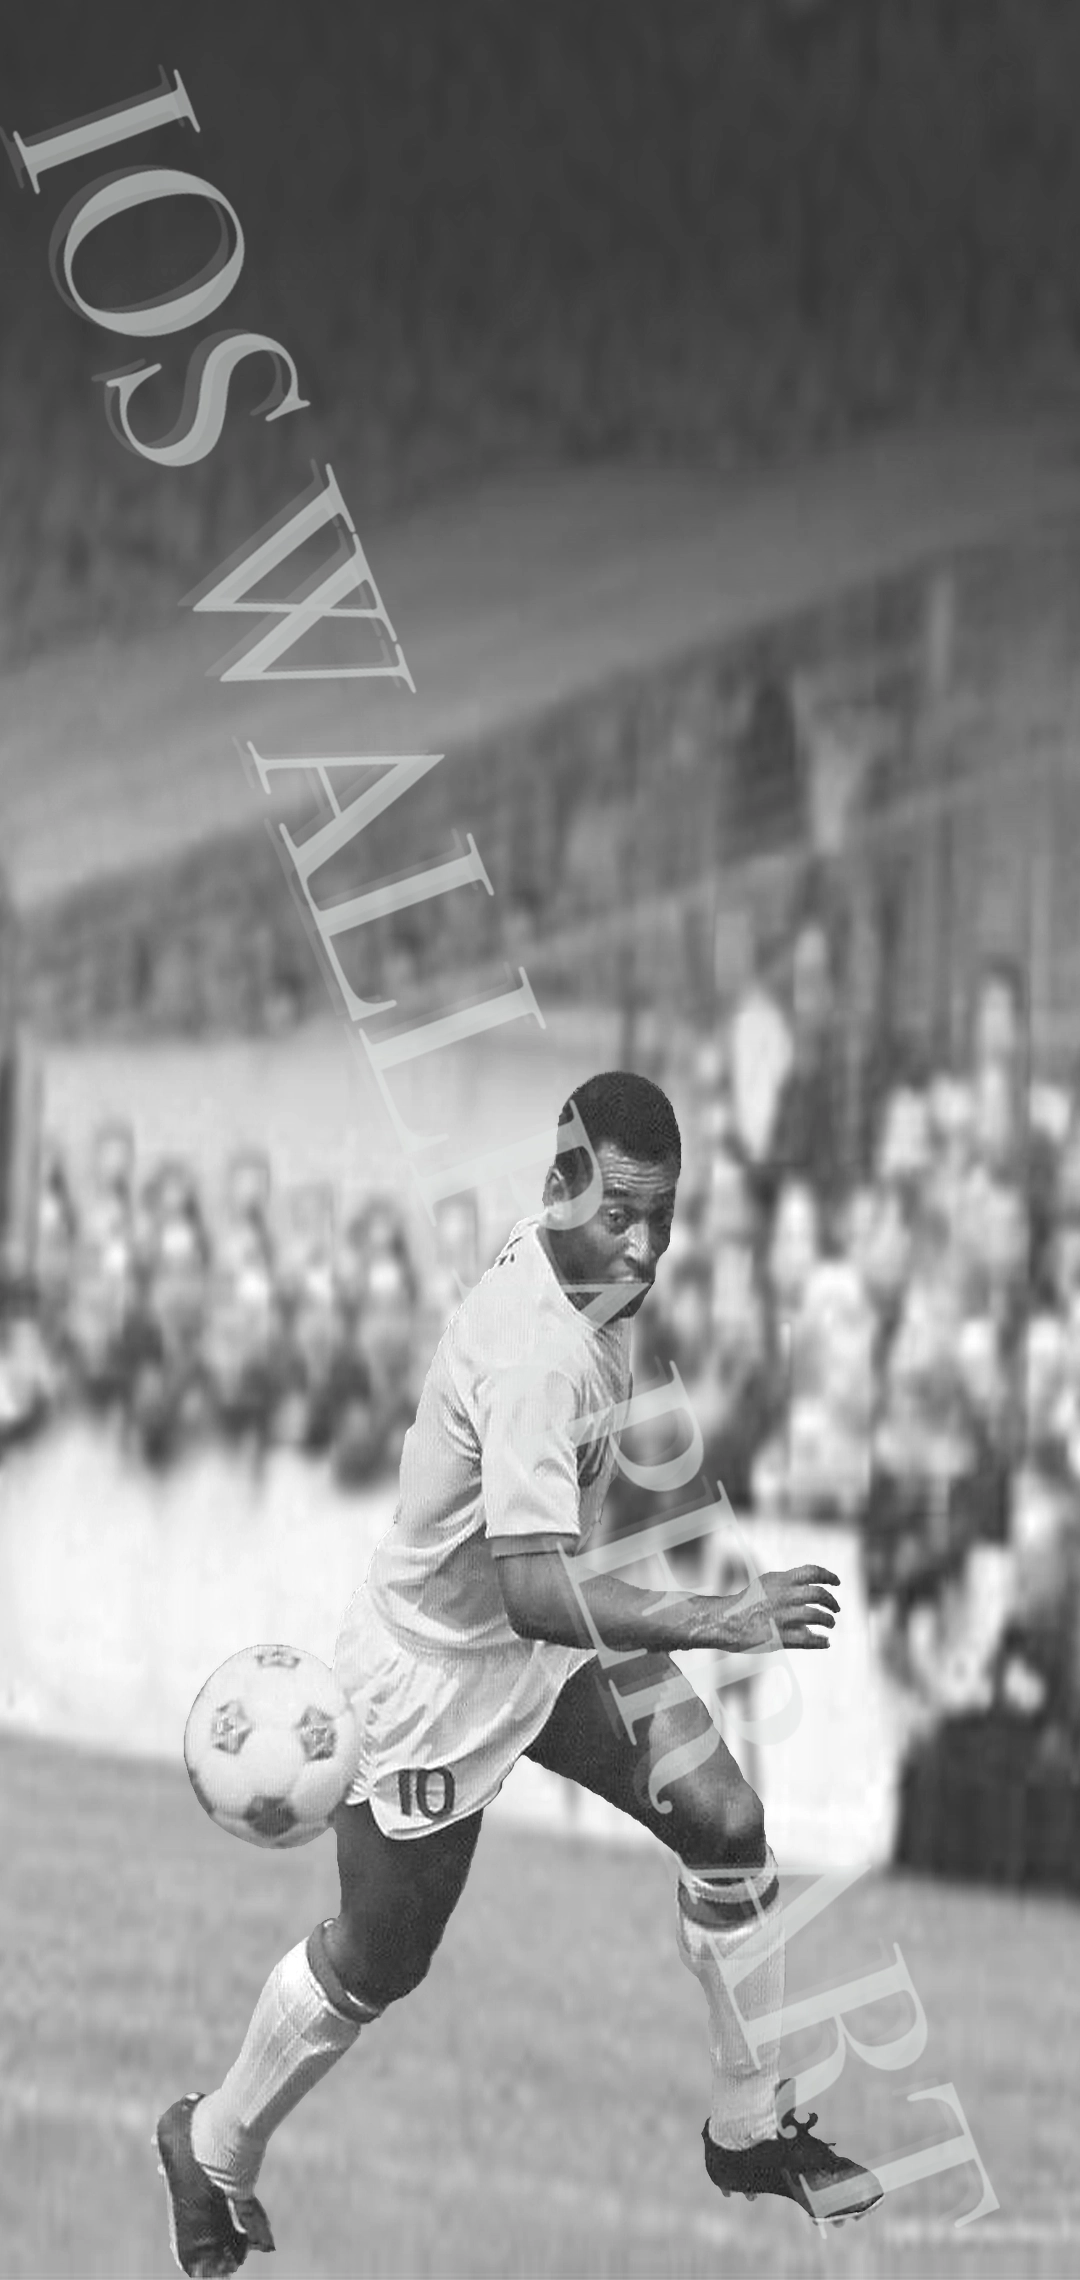 Pele The Soccer Legend (Football) - Plum's Digital Art